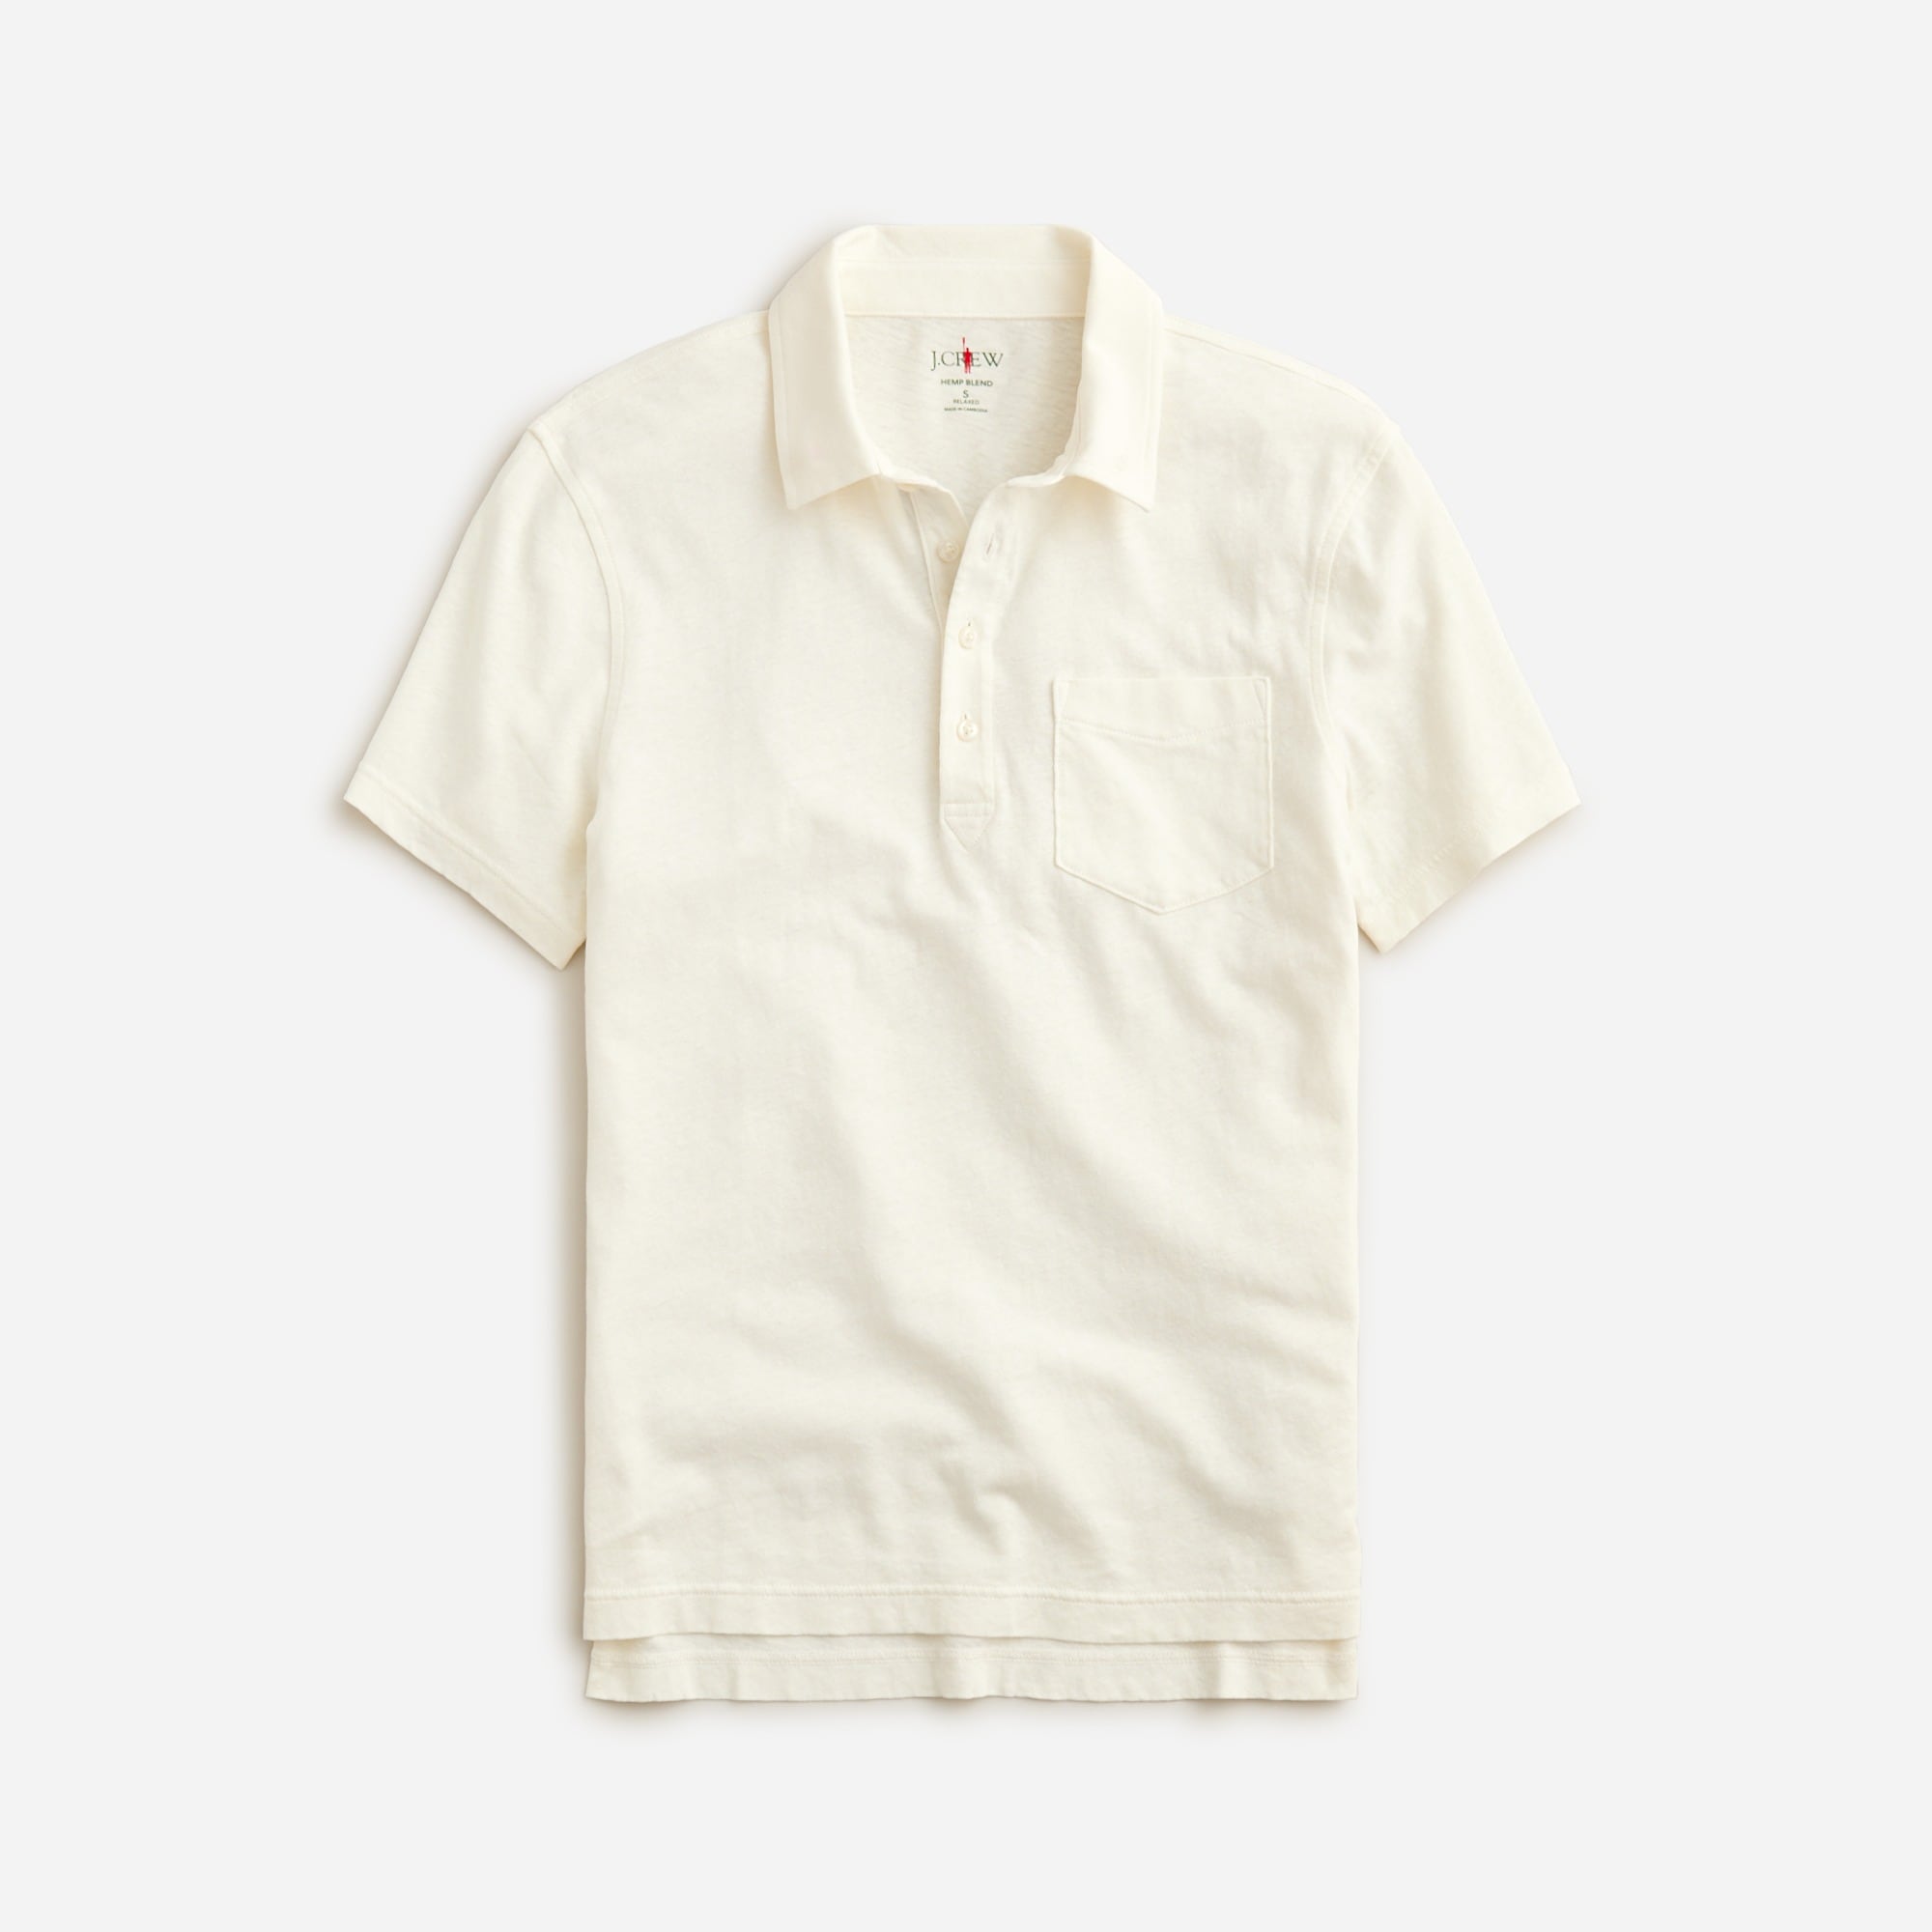 mens Tall hemp-organic cotton blend polo shirt